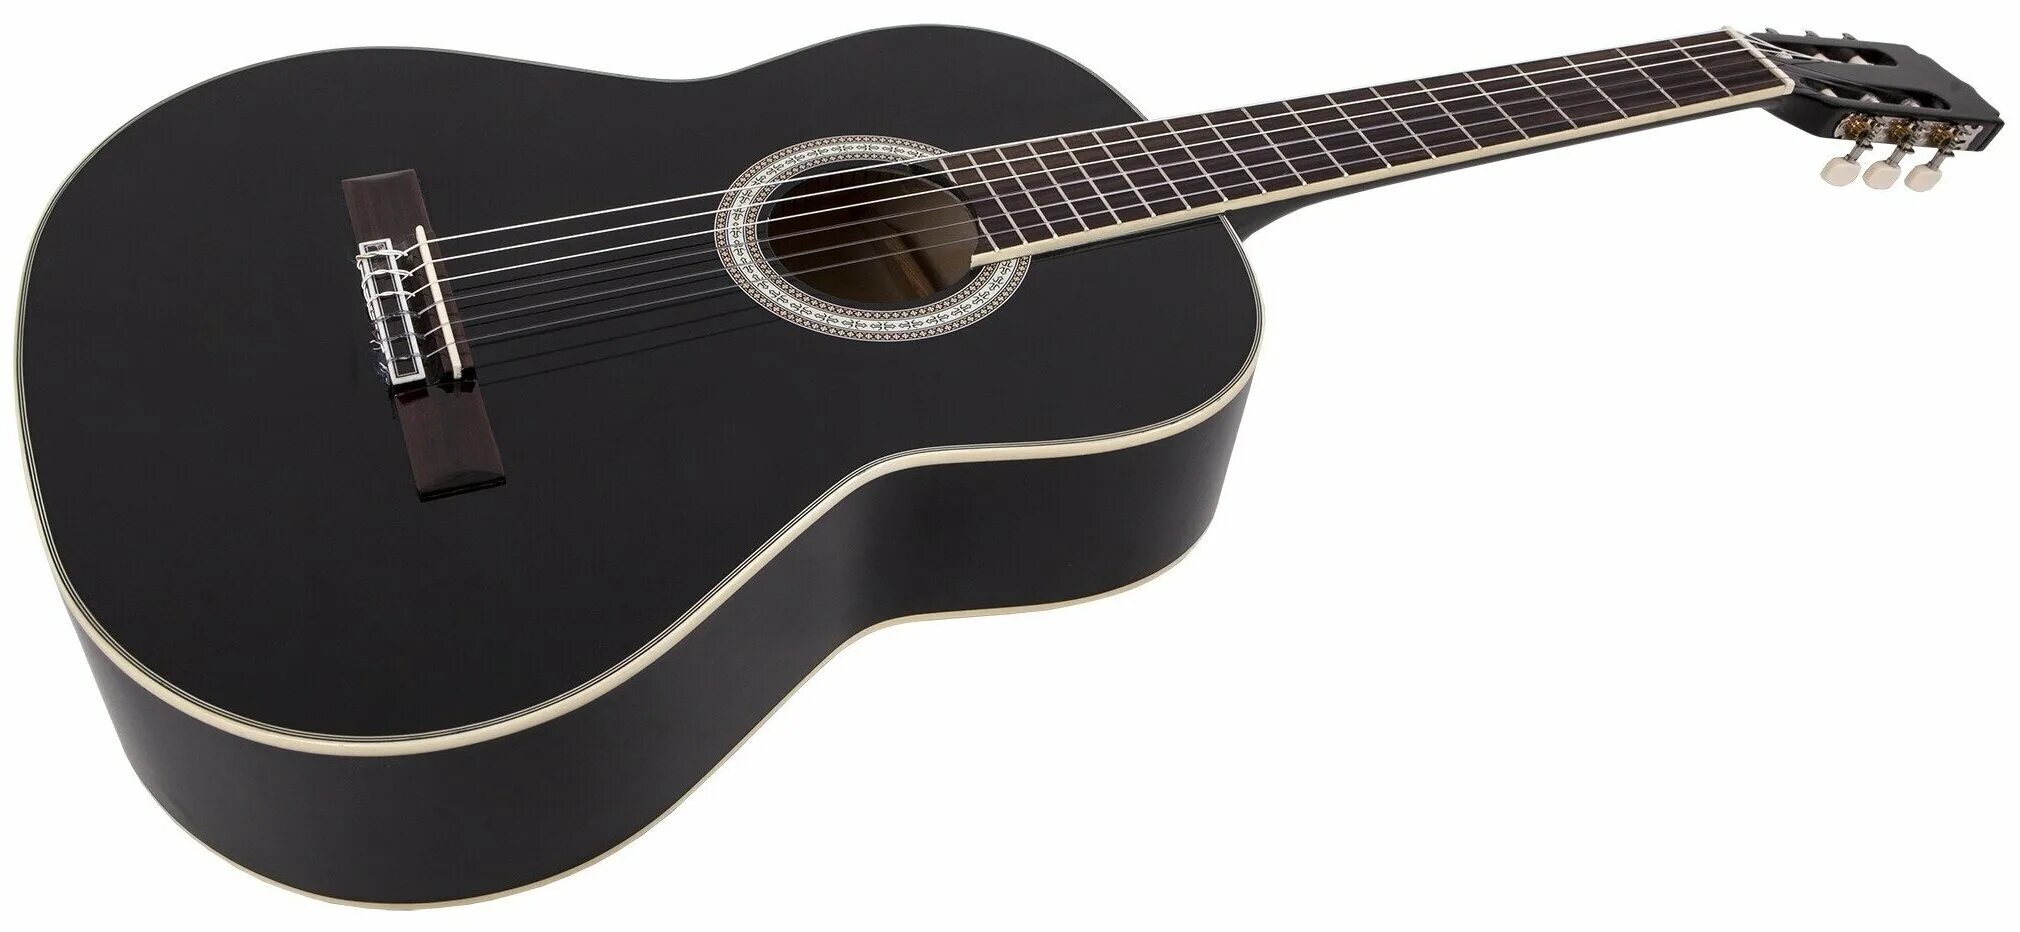 Классическая гитара Aria AK-25. Классическая гитара Flight c-120 BK 4/4. Гитара Флайт ц 120 черная. Гитара Ария 120.